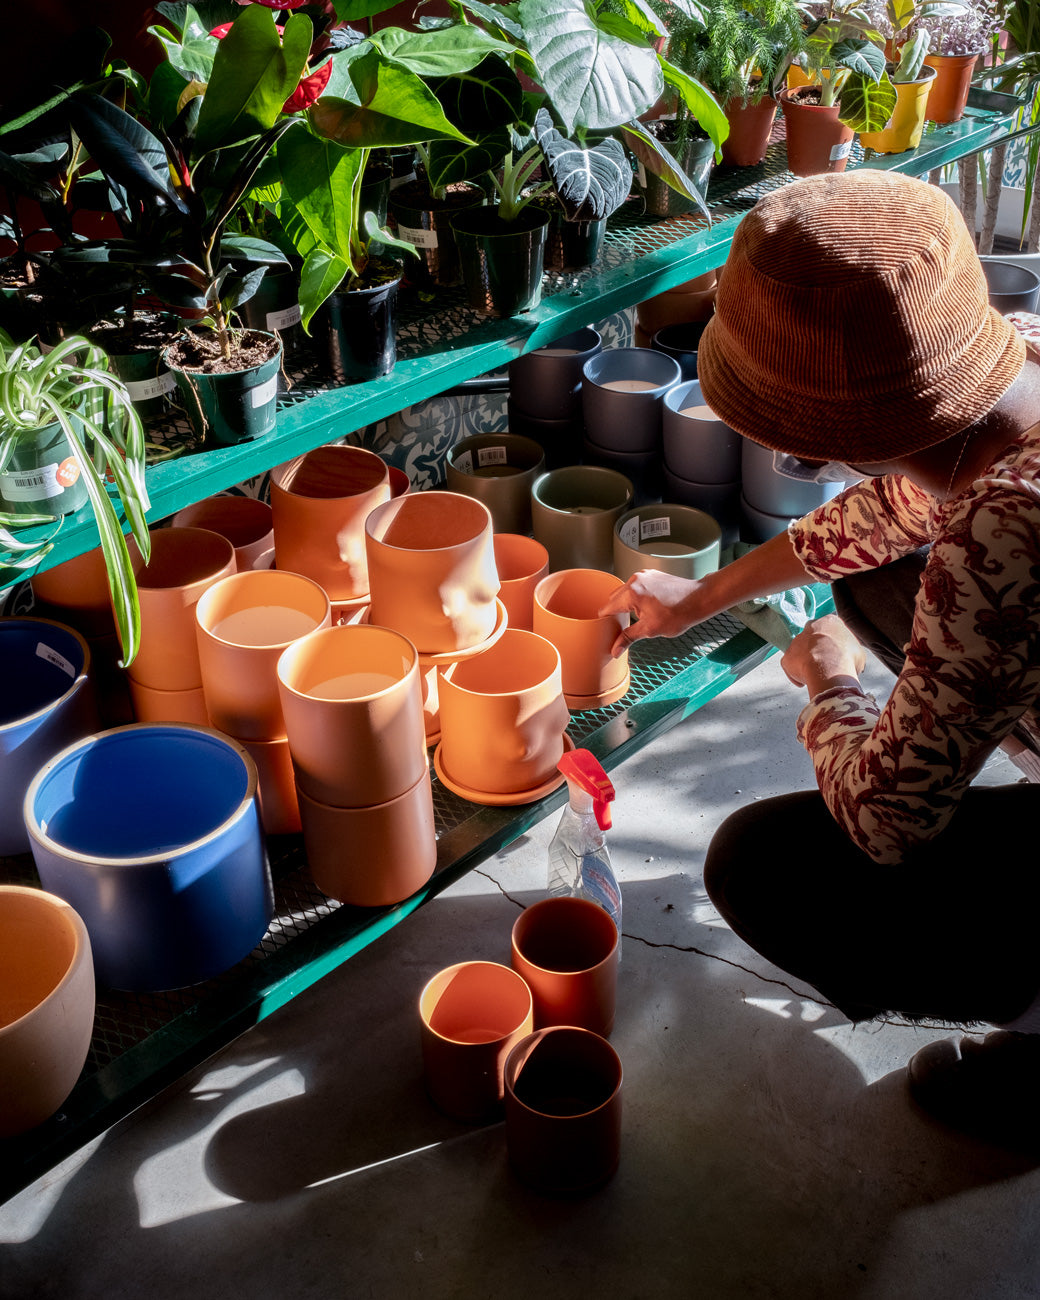 Glazed and unglazed terra cotta pottery at Tula Plants & Design in Brooklyn NY.